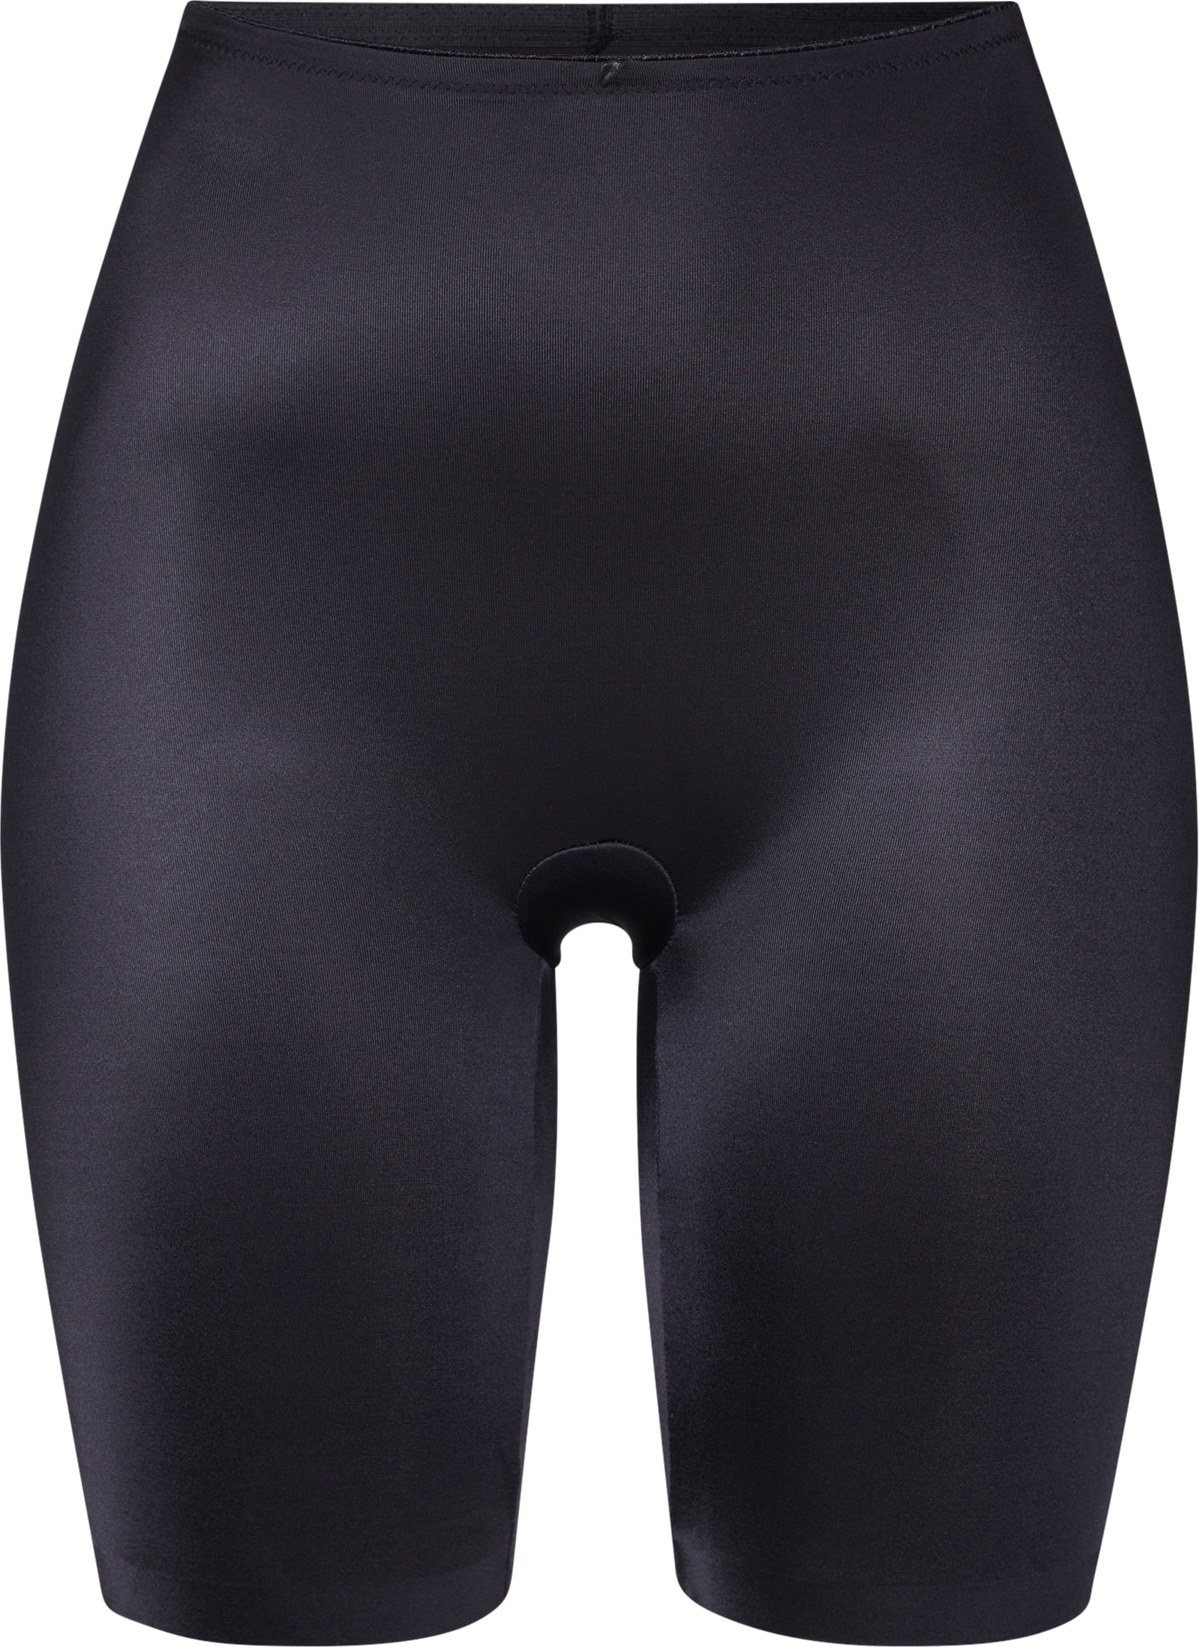 MAGIC Bodyfashion Stahovací kalhotky 'Luxury Bermuda' černá